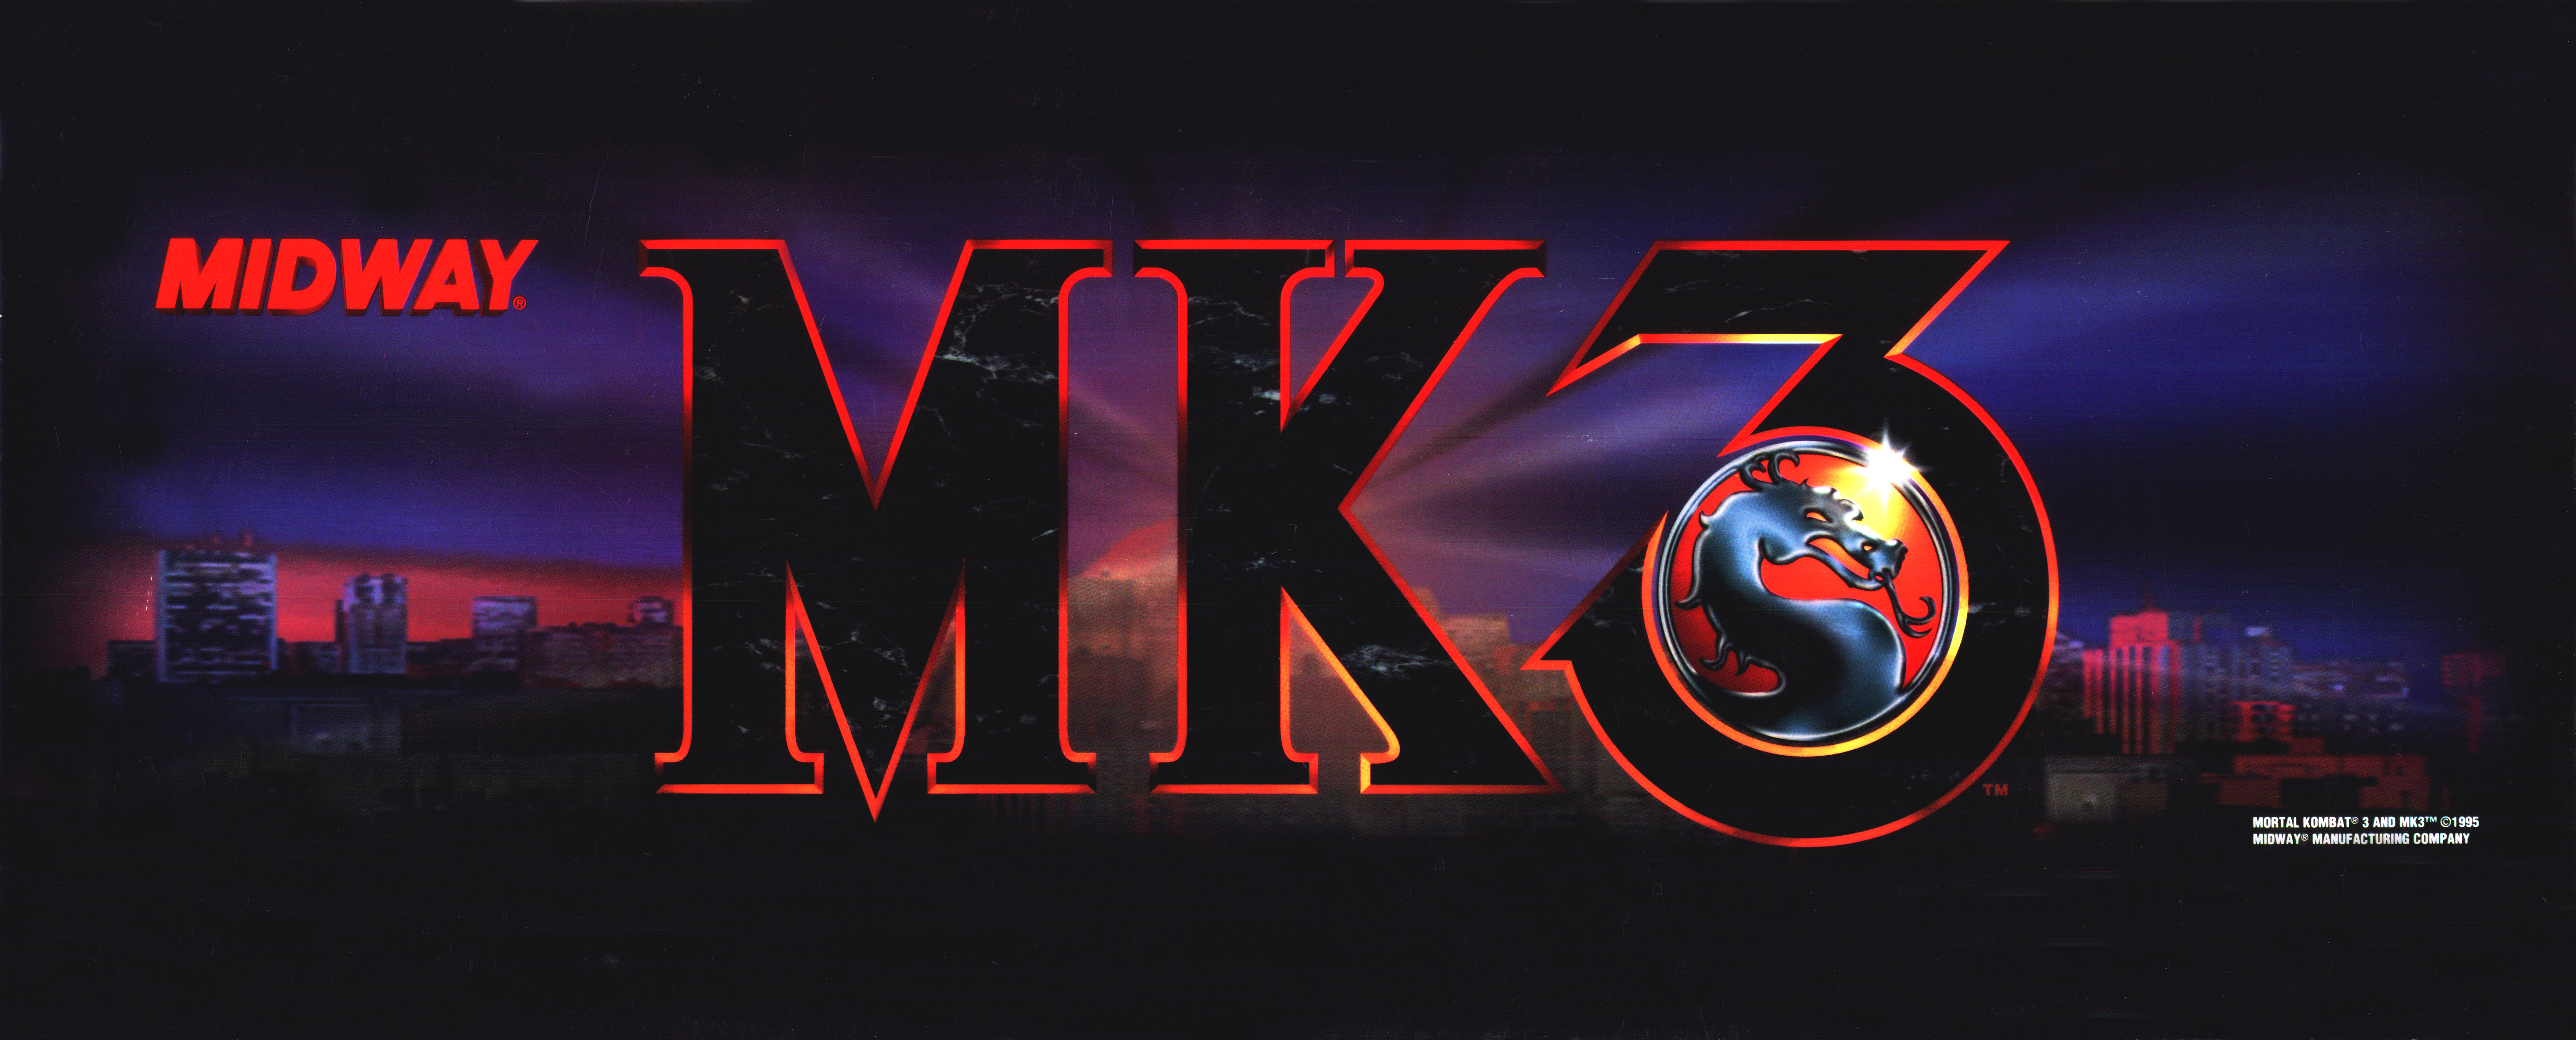 Мортал комбат 3 ultimate. Mk3 Ultimate. МК 3. Mortal Kombat 3. Mortal Kombat 3 Arcade.